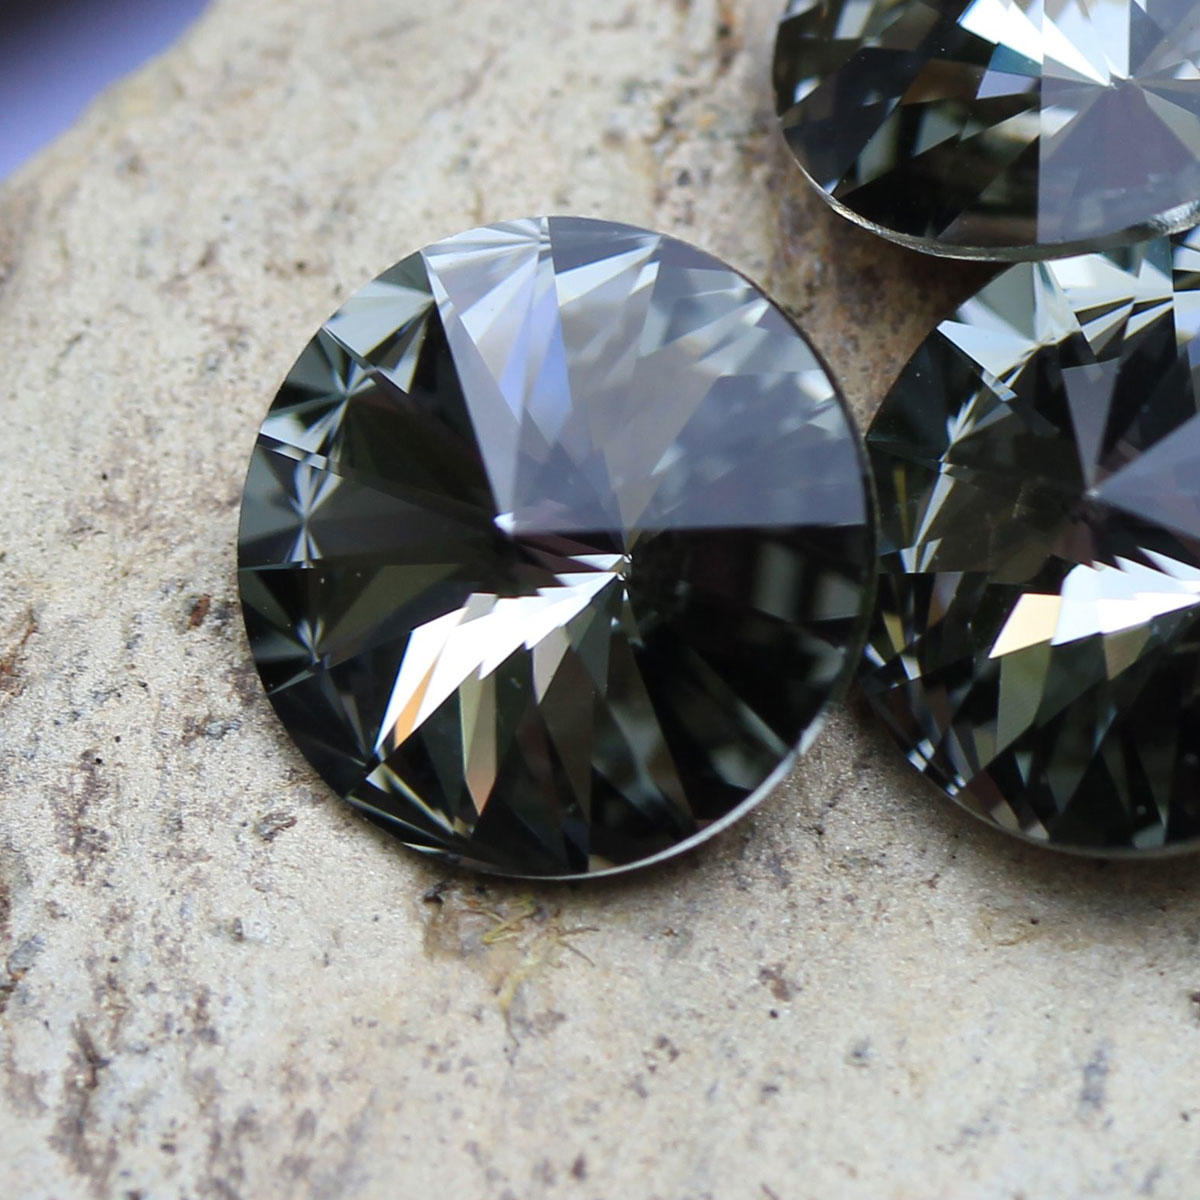 Black Diamond (215) 144 Pcs Swarovski 2058/2088 Crystal Flatbacks Rhinestones Nail Art Mixed with Sizes SS5, Ss7, ss9, SS12, SS16, SS20, SS30